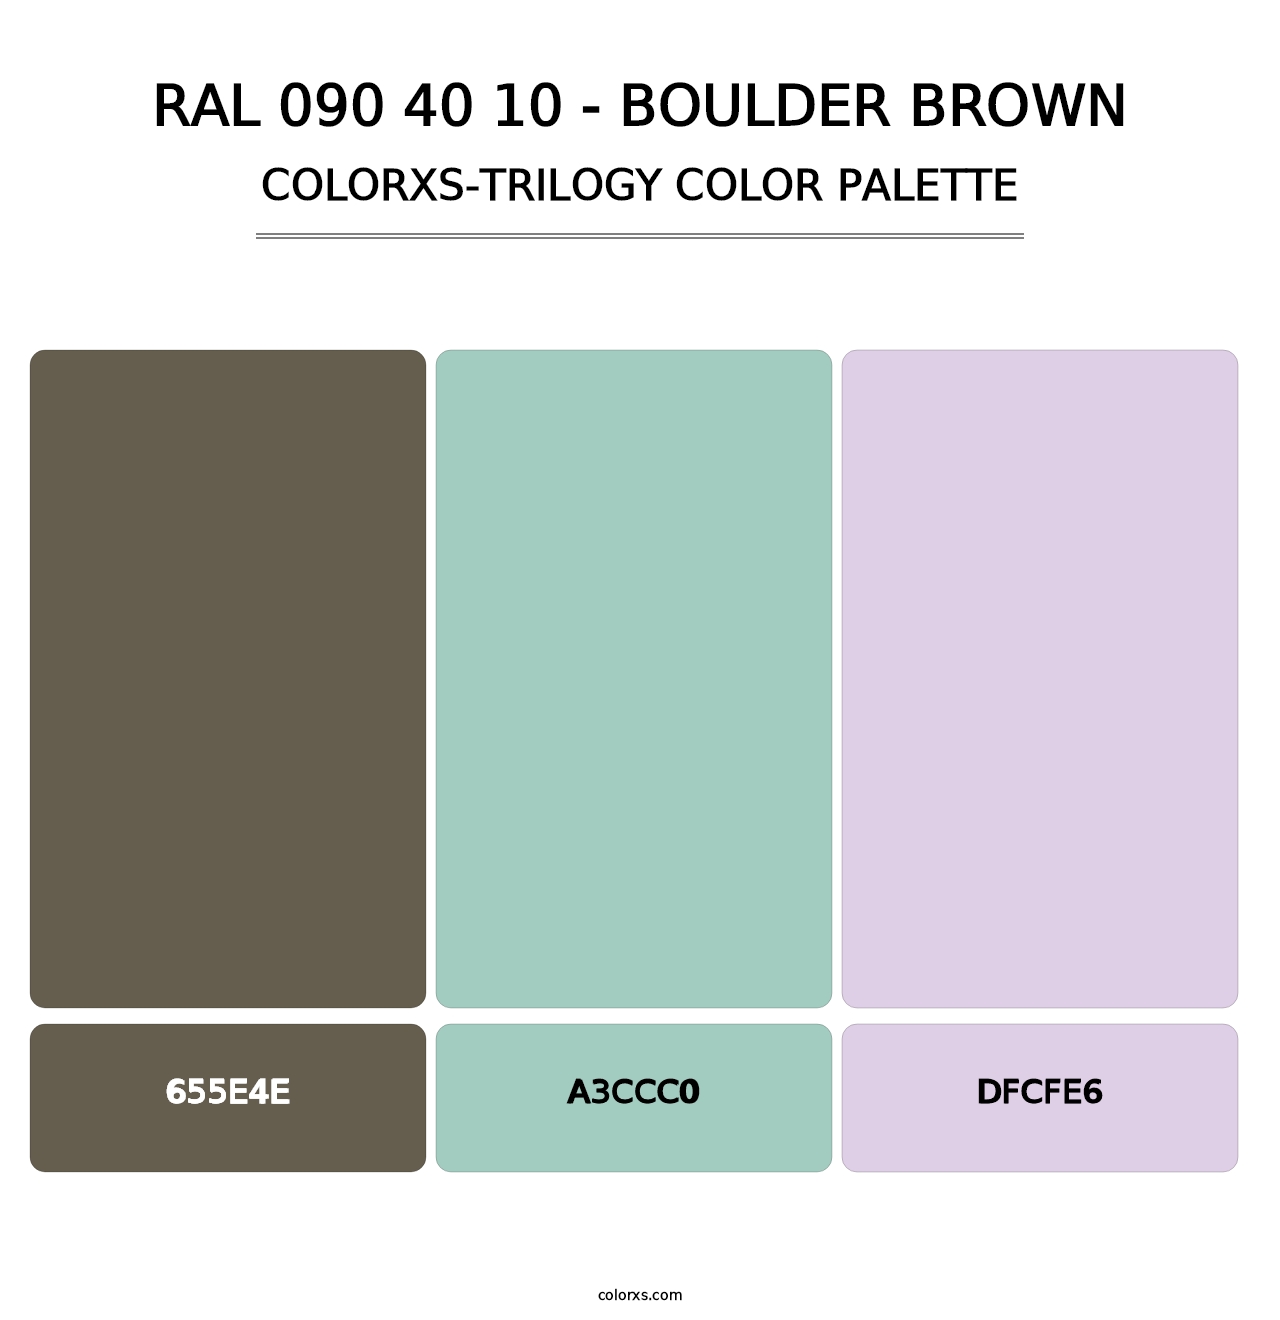 RAL 090 40 10 - Boulder Brown - Colorxs Trilogy Palette